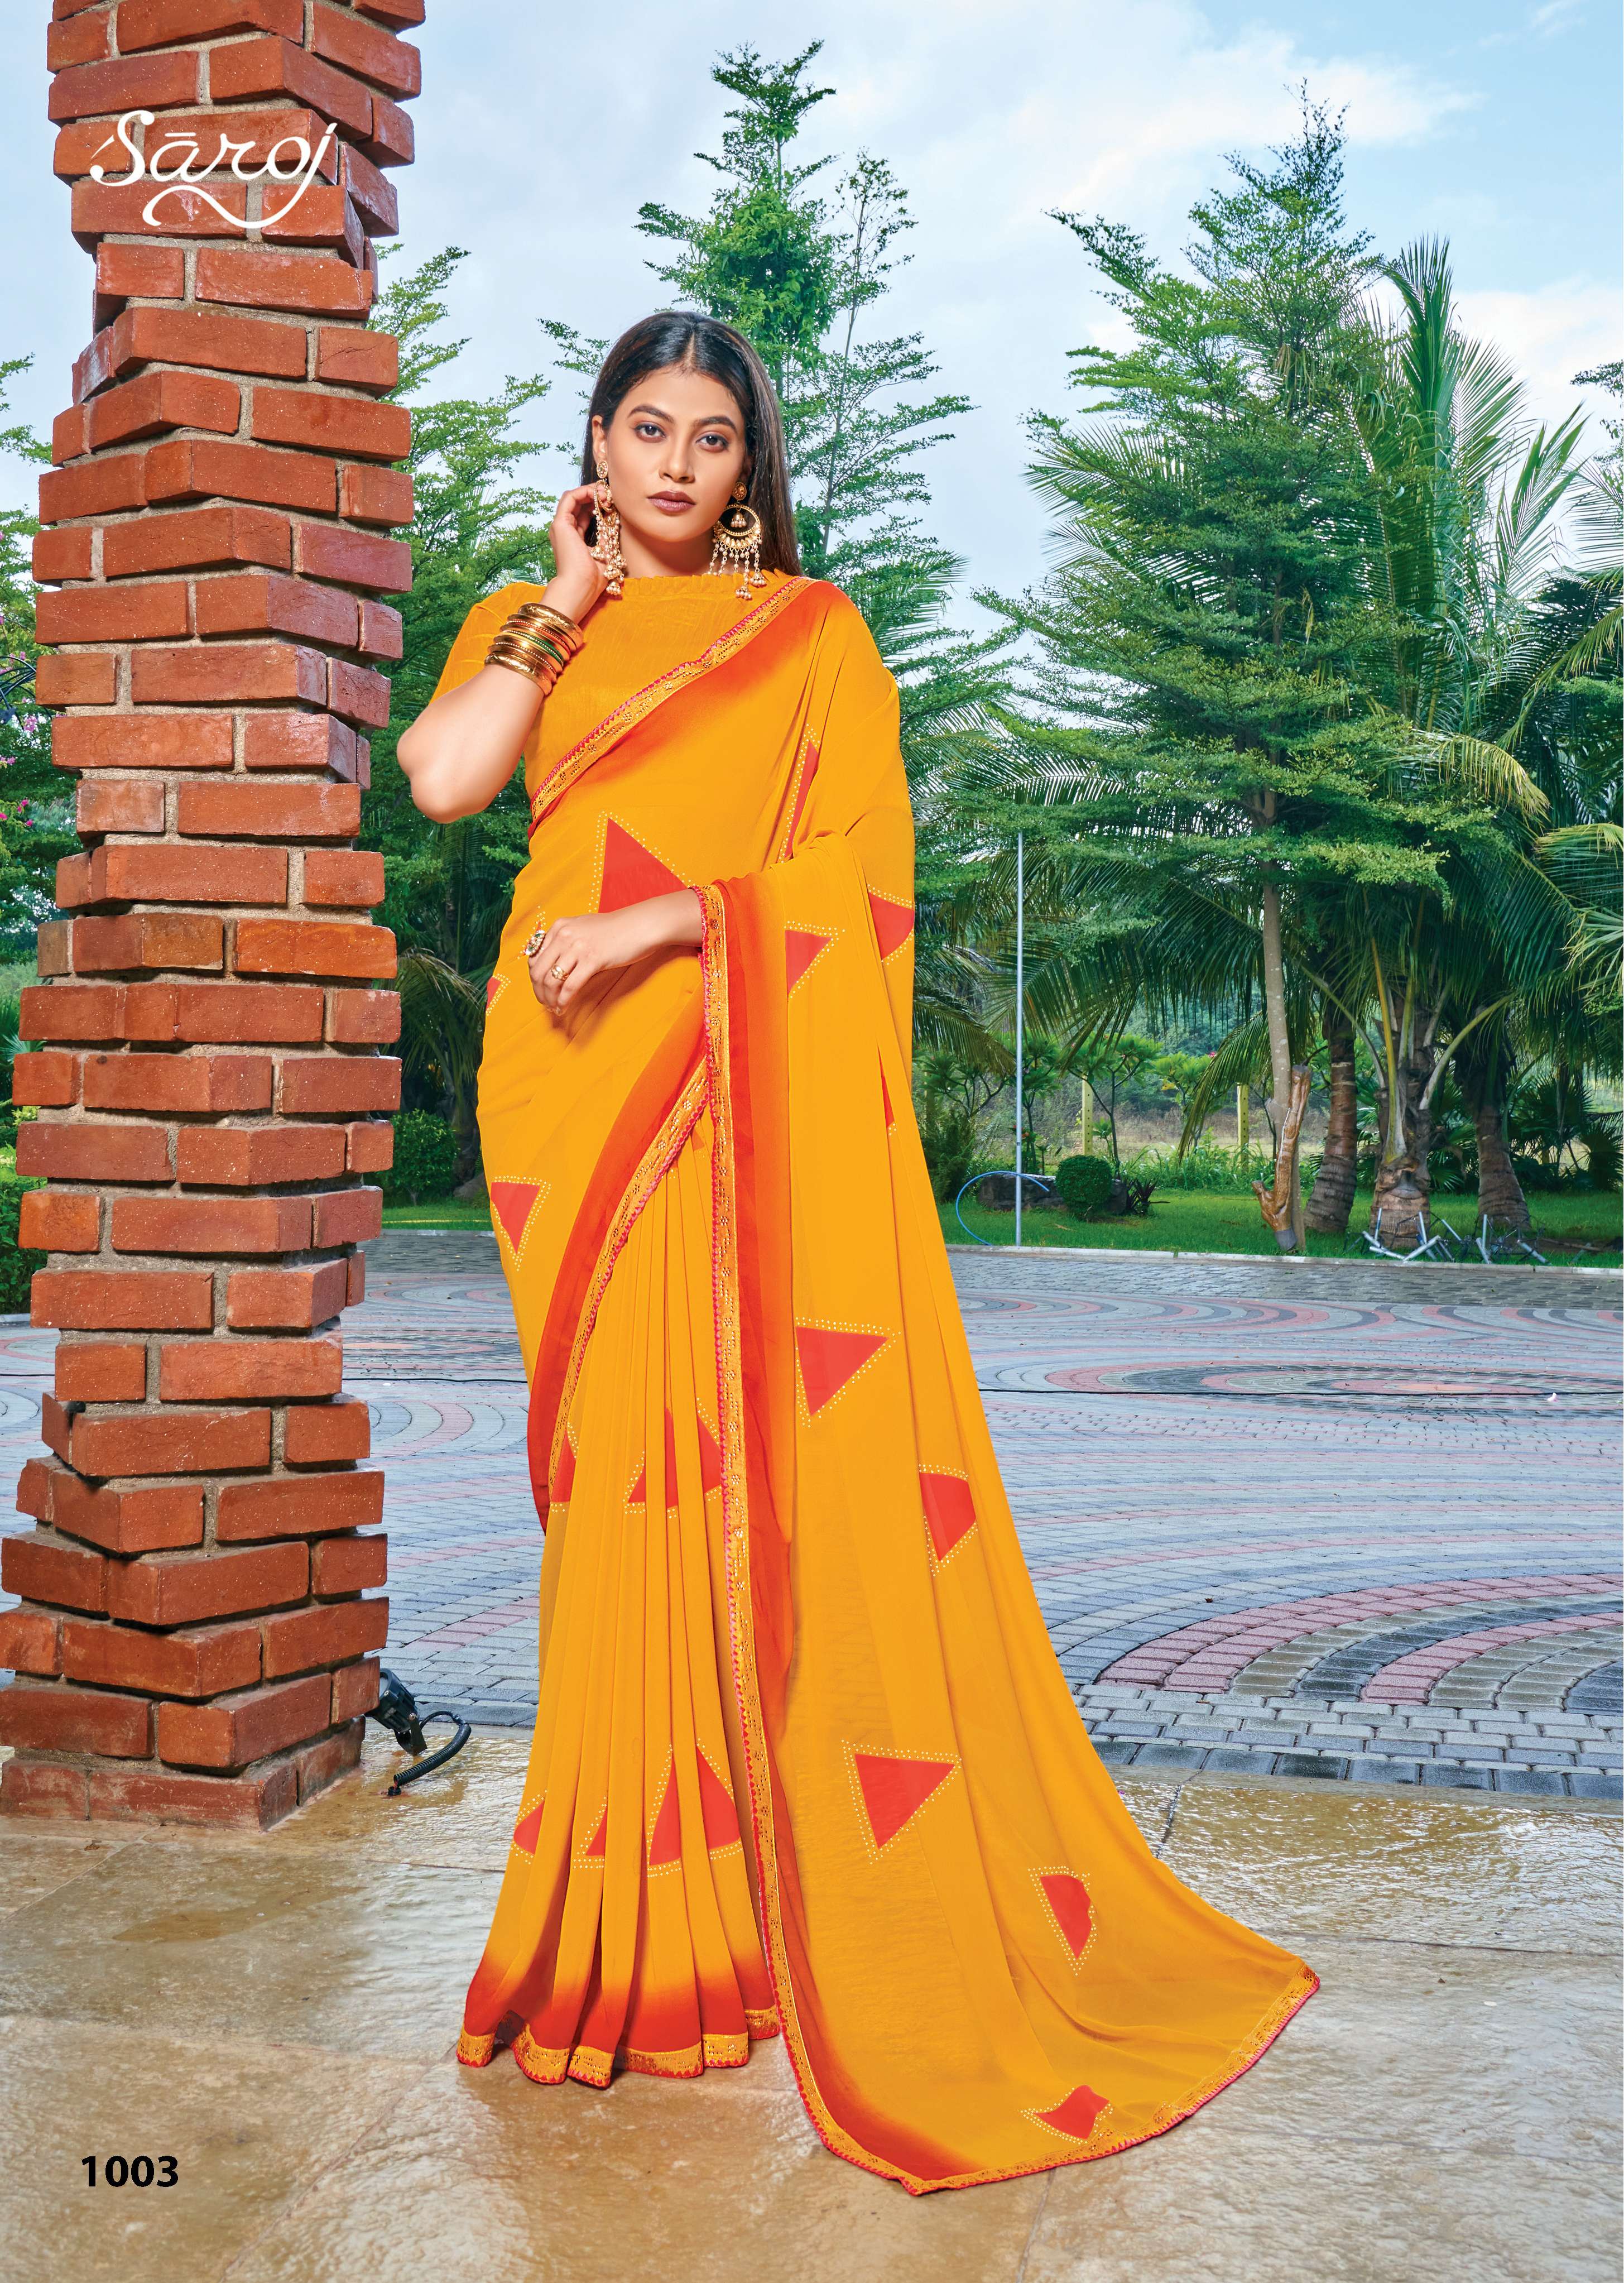 Saroj textile presents Nagme casual sarees catalogue